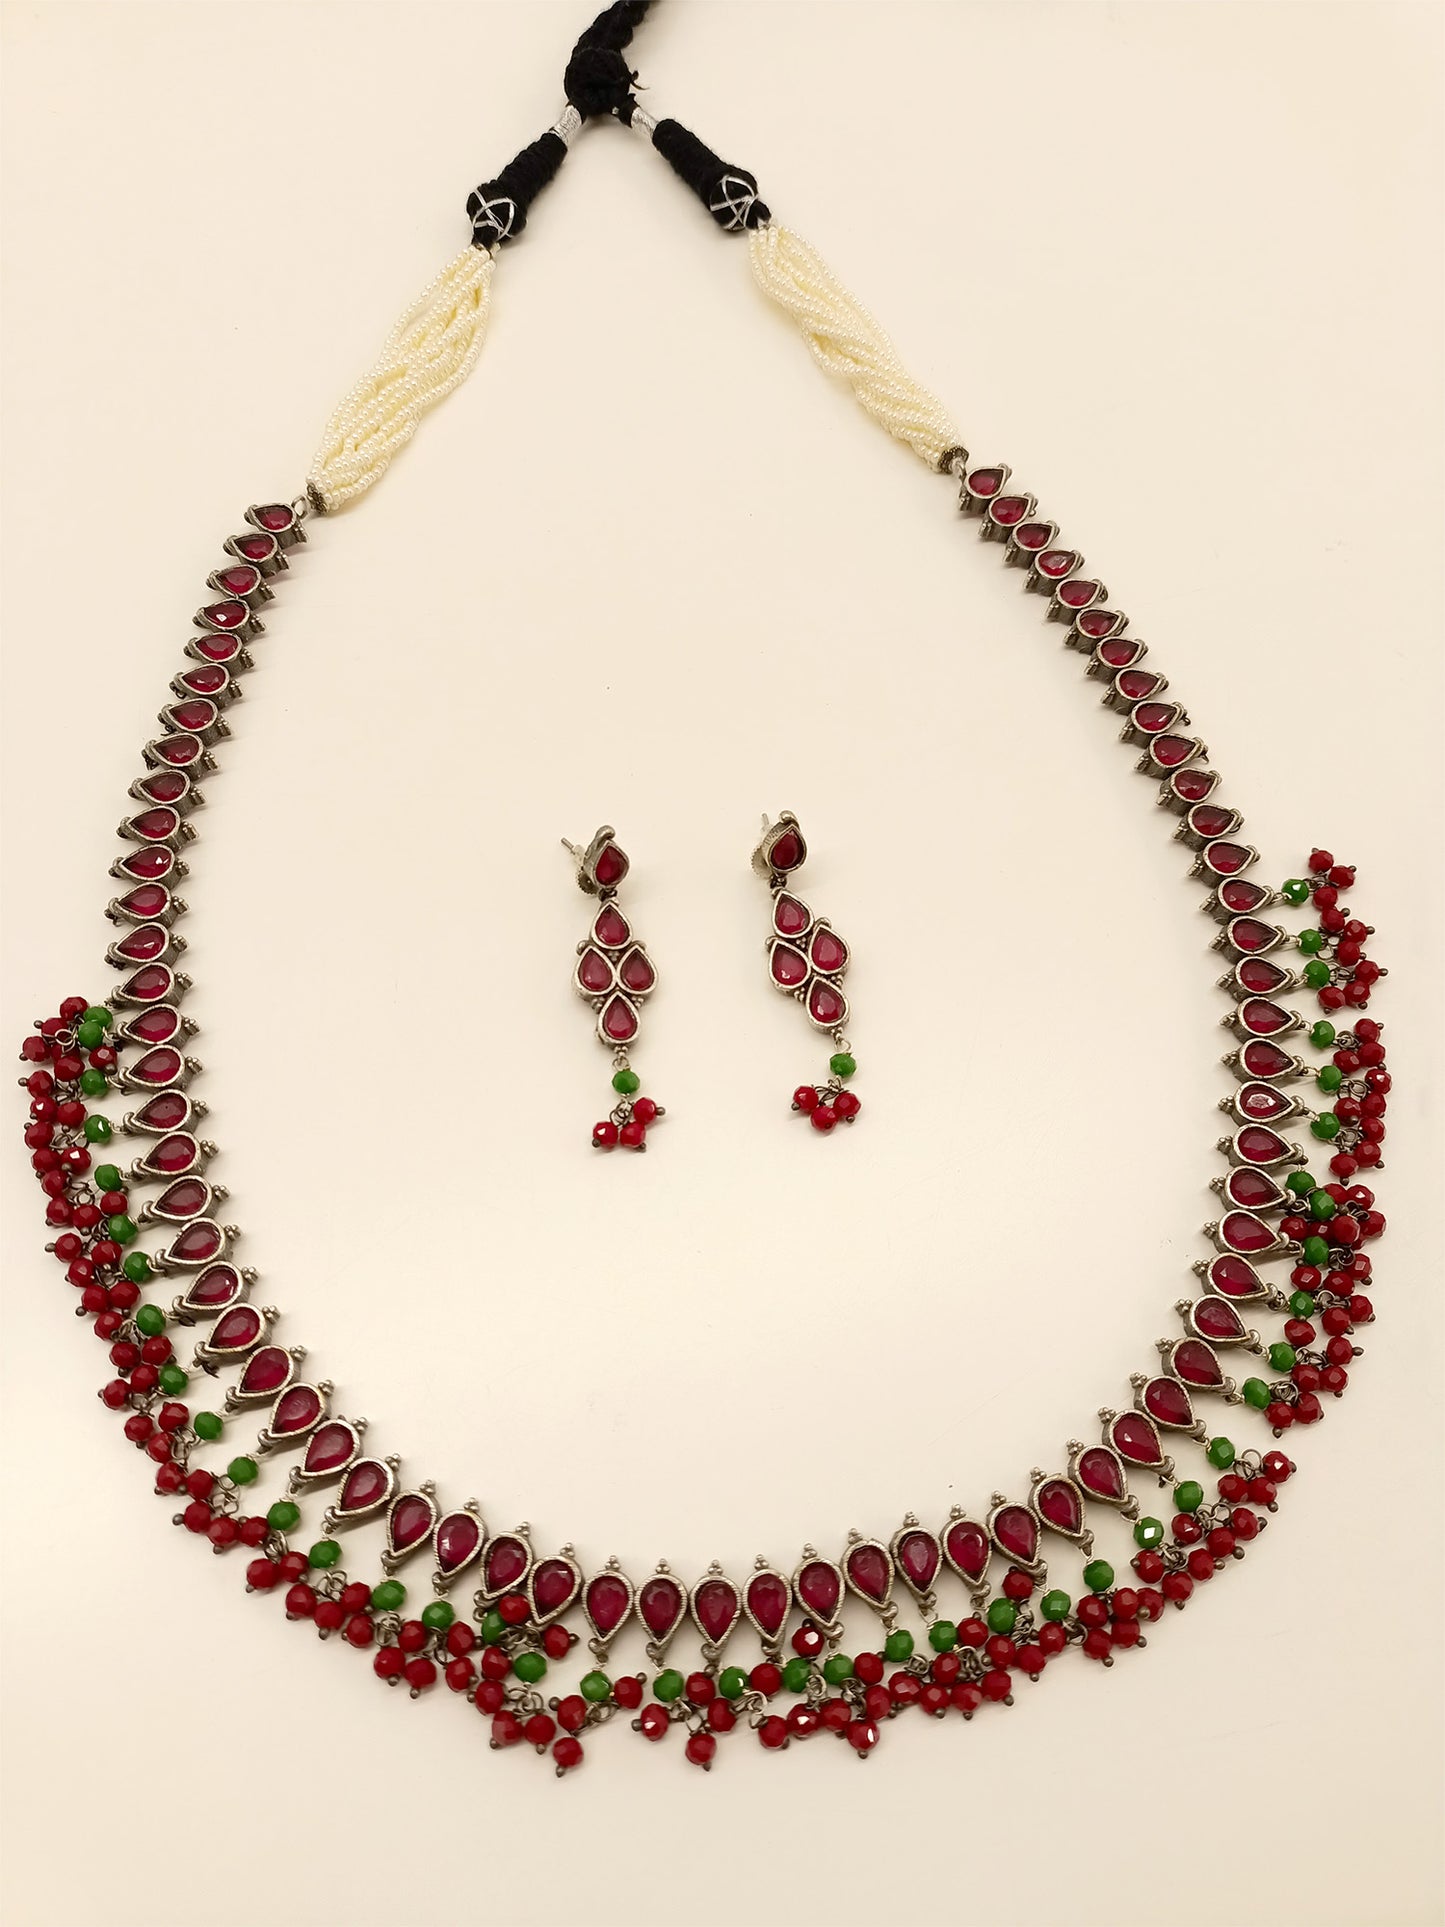 Nabhya R & G Long Oxidized Necklace Set